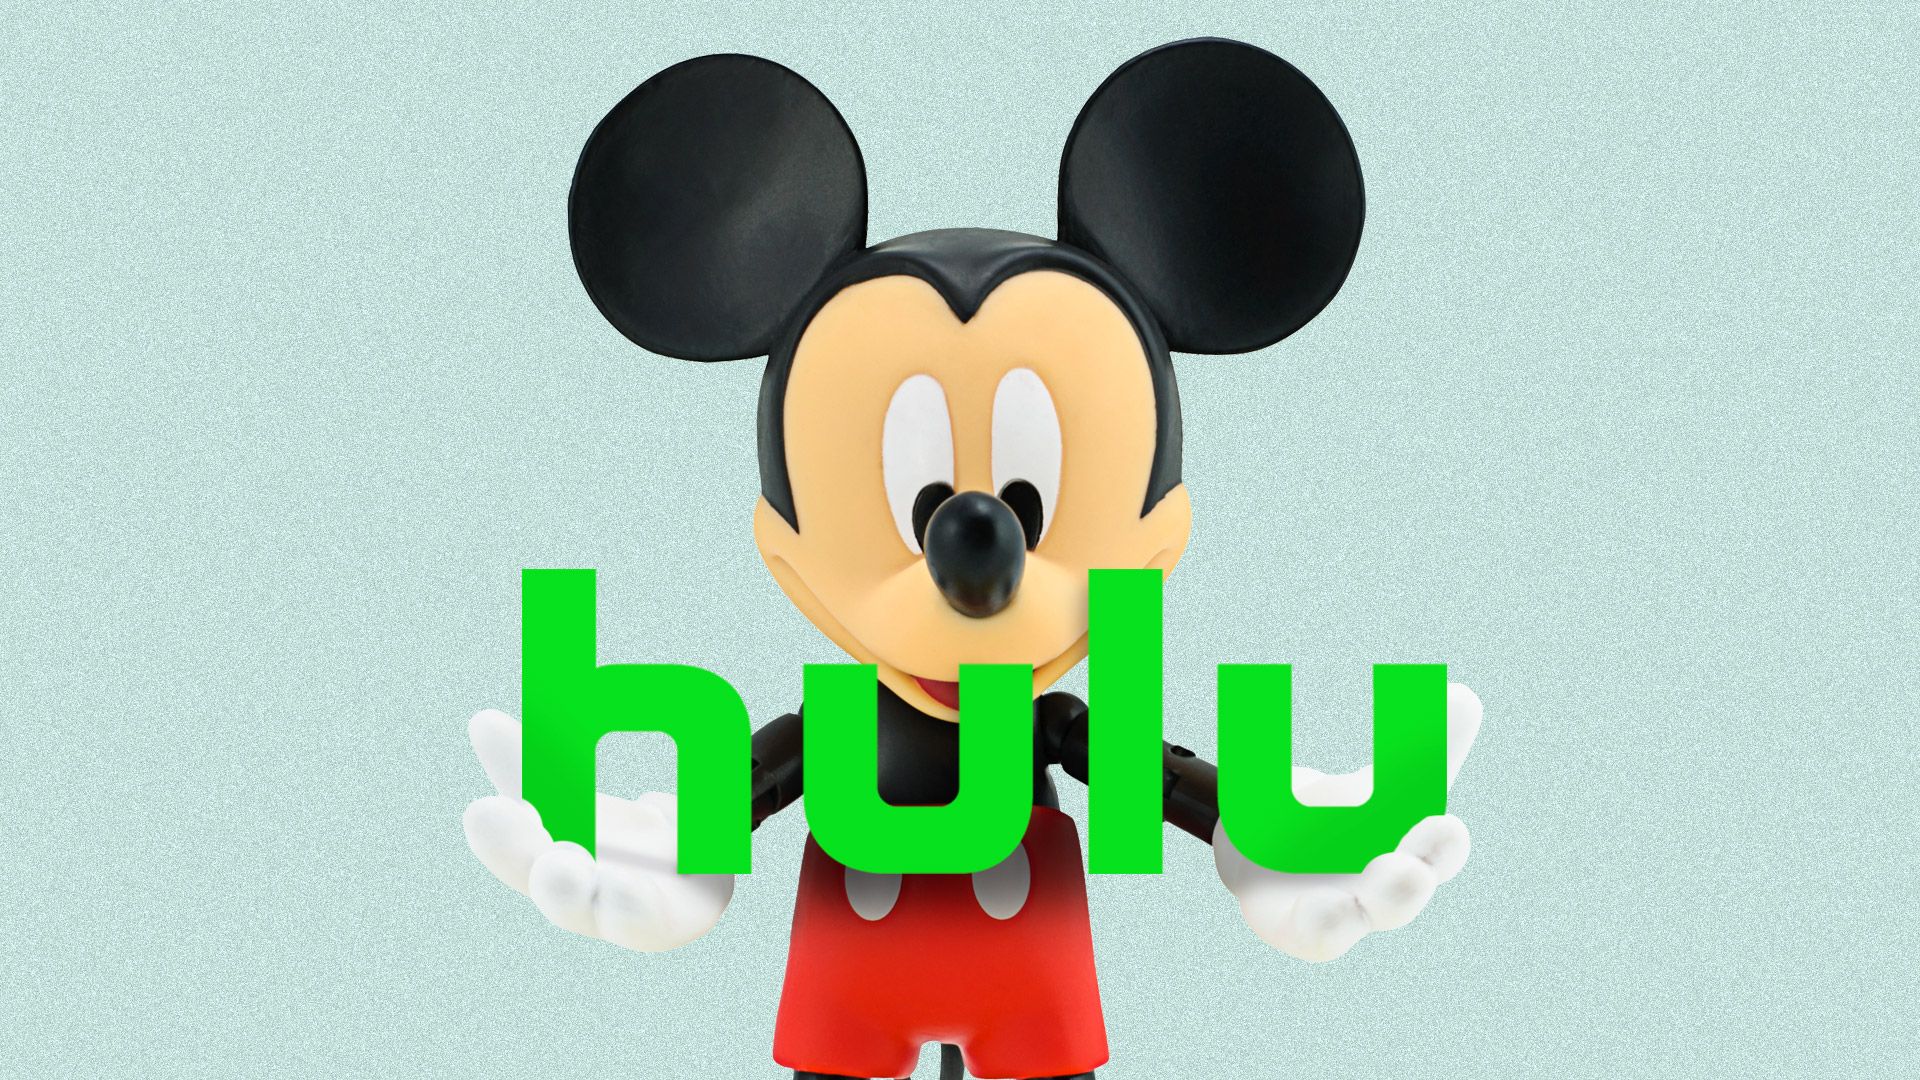 Illustration of Mickey Mouse holding Hulu logo